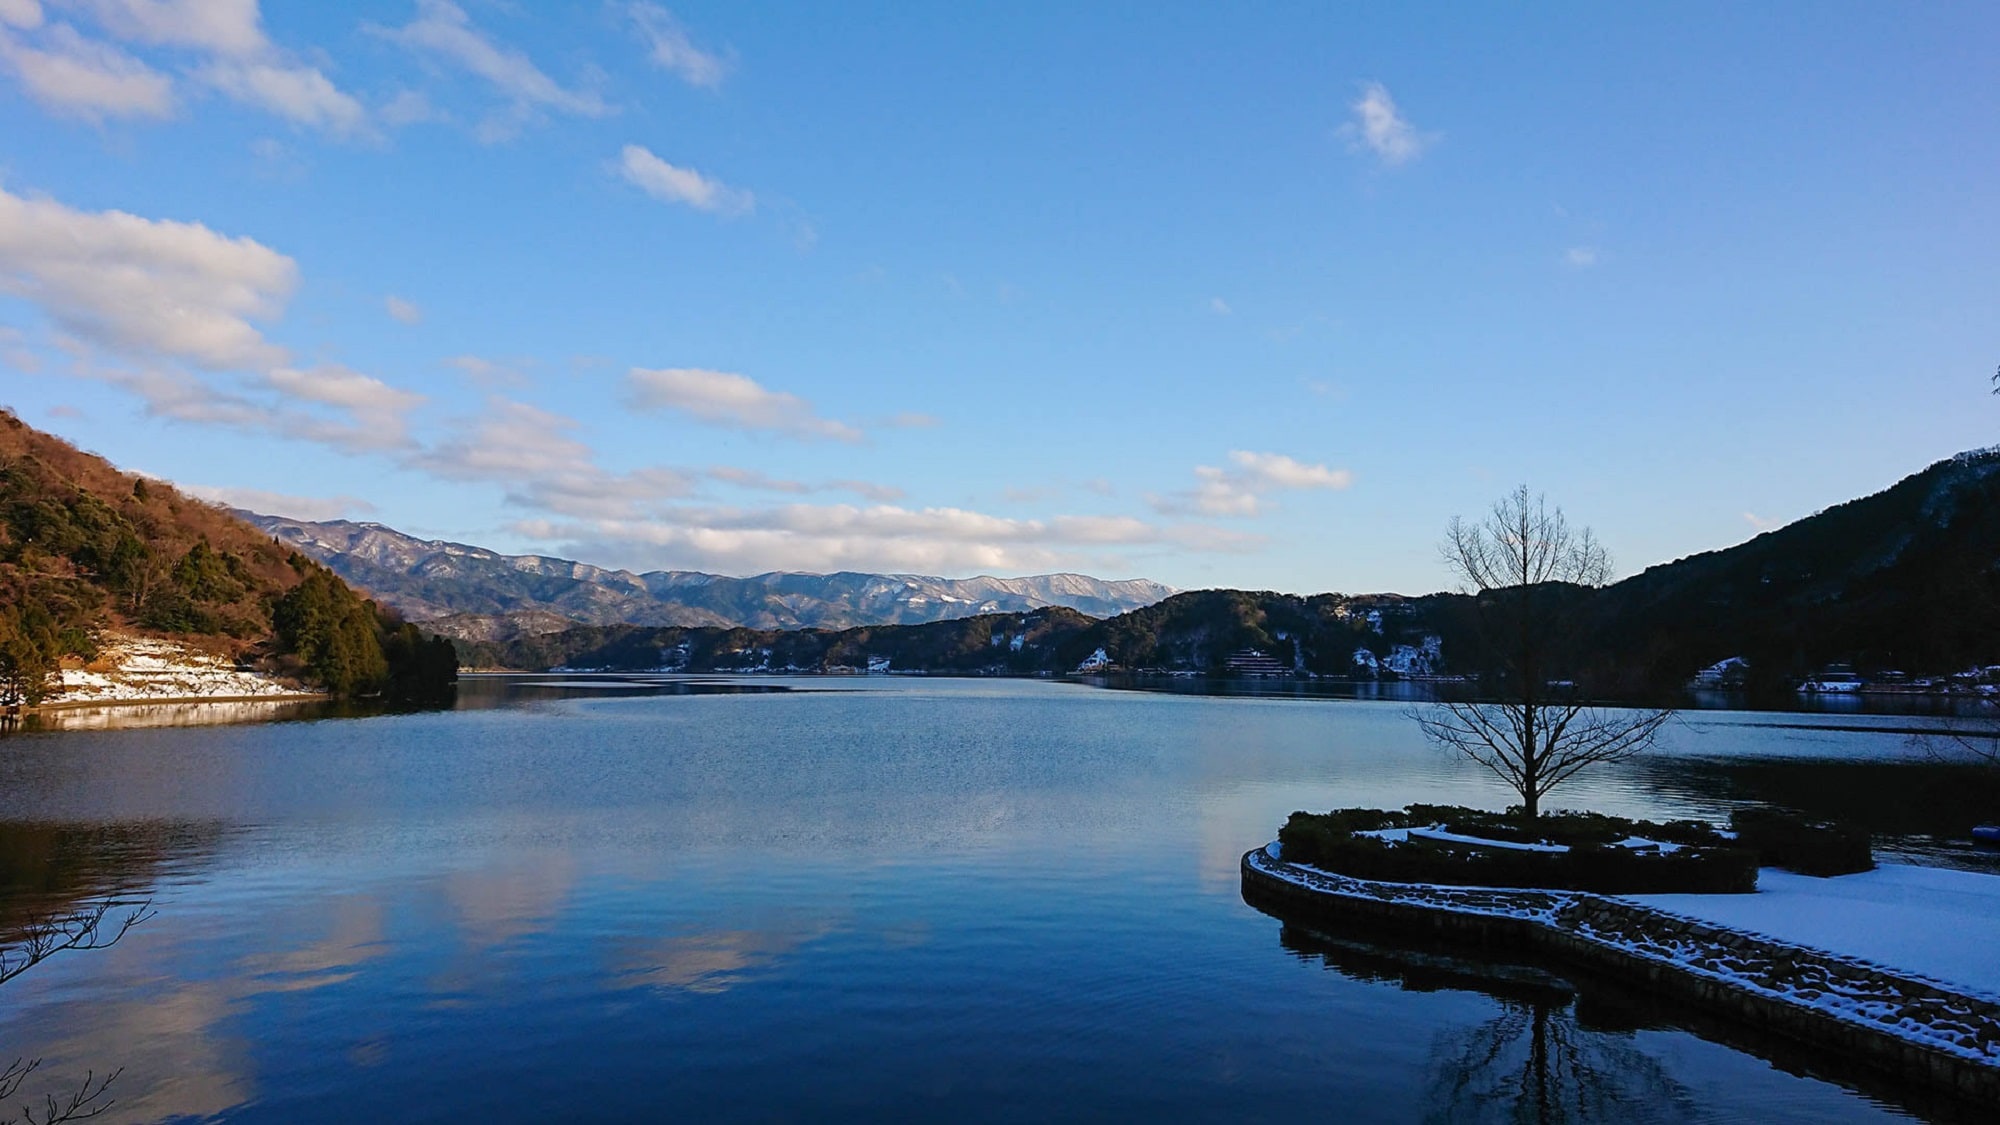 Lake Suigetsu seen from Suigetsu flowers